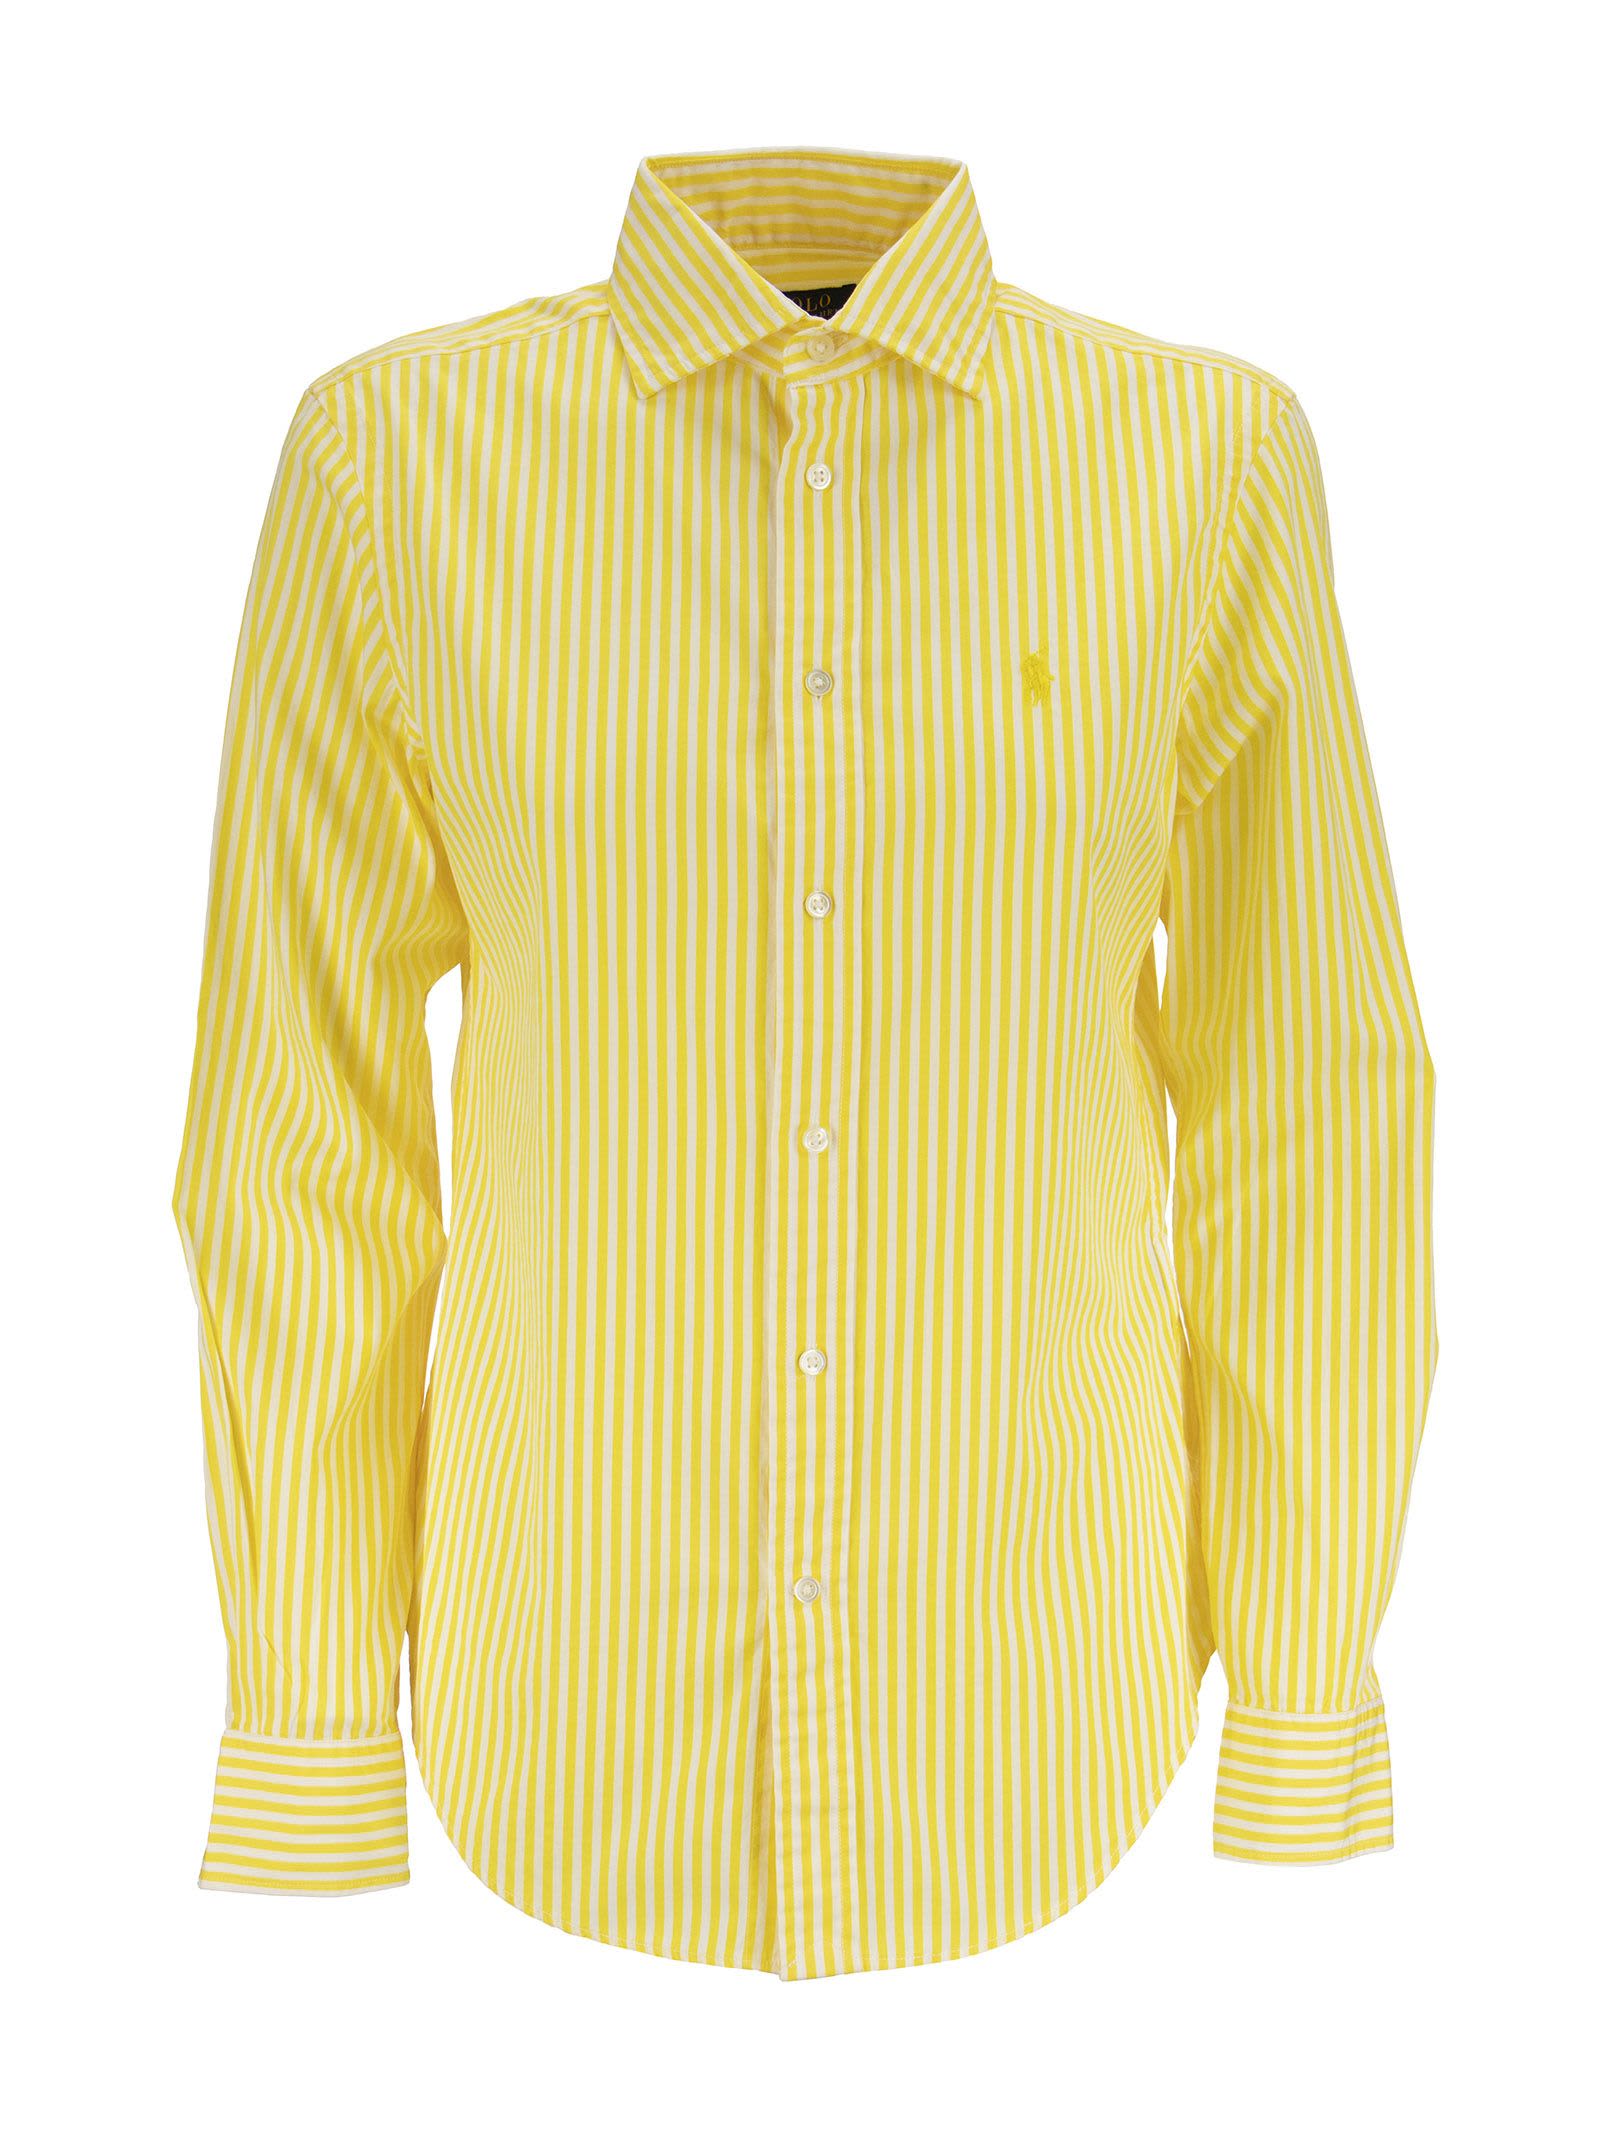 Ralph Lauren Classic Fit Striped Cotton Shirt